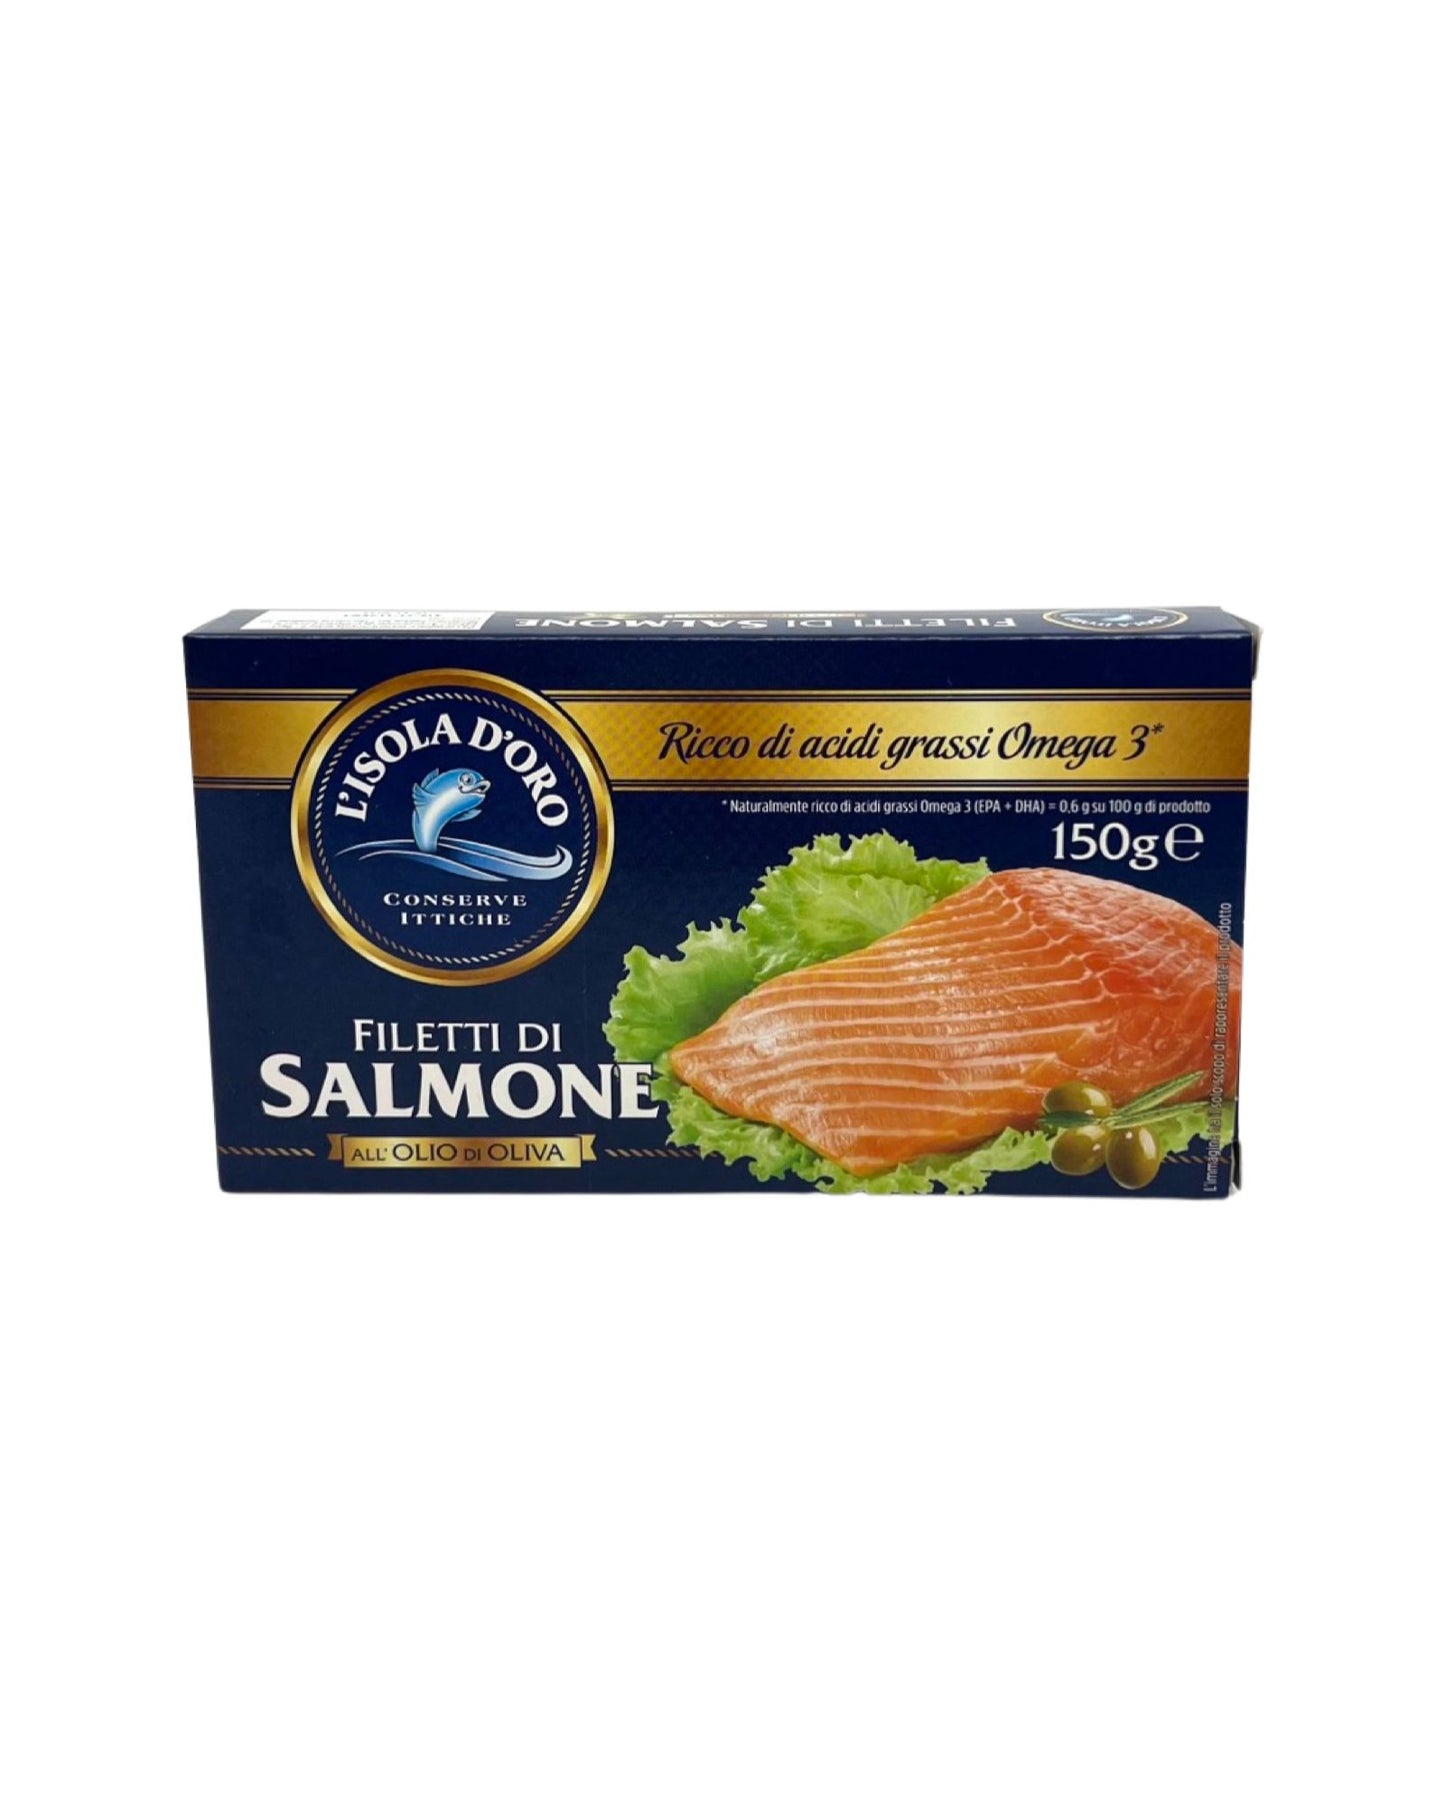 Salmon fillets in olive oil (150g)